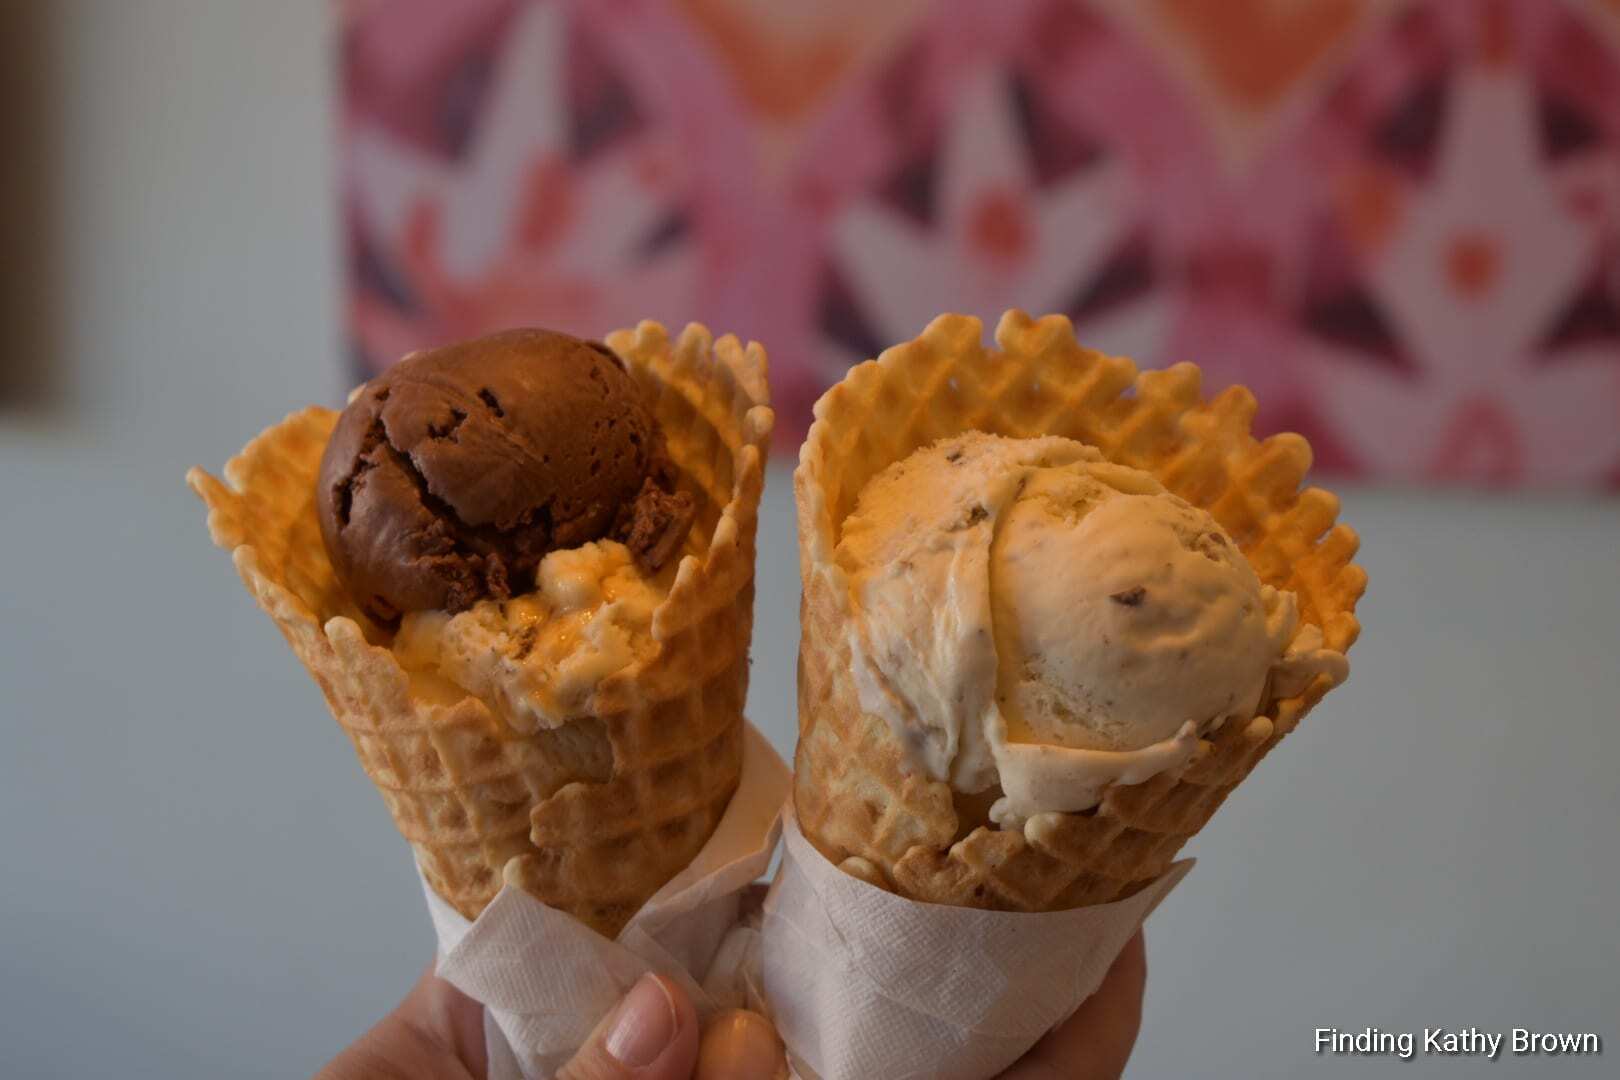 Clumpies Ice Cream Cones in a waffle cone. Chocolate and Vanilla ice cream